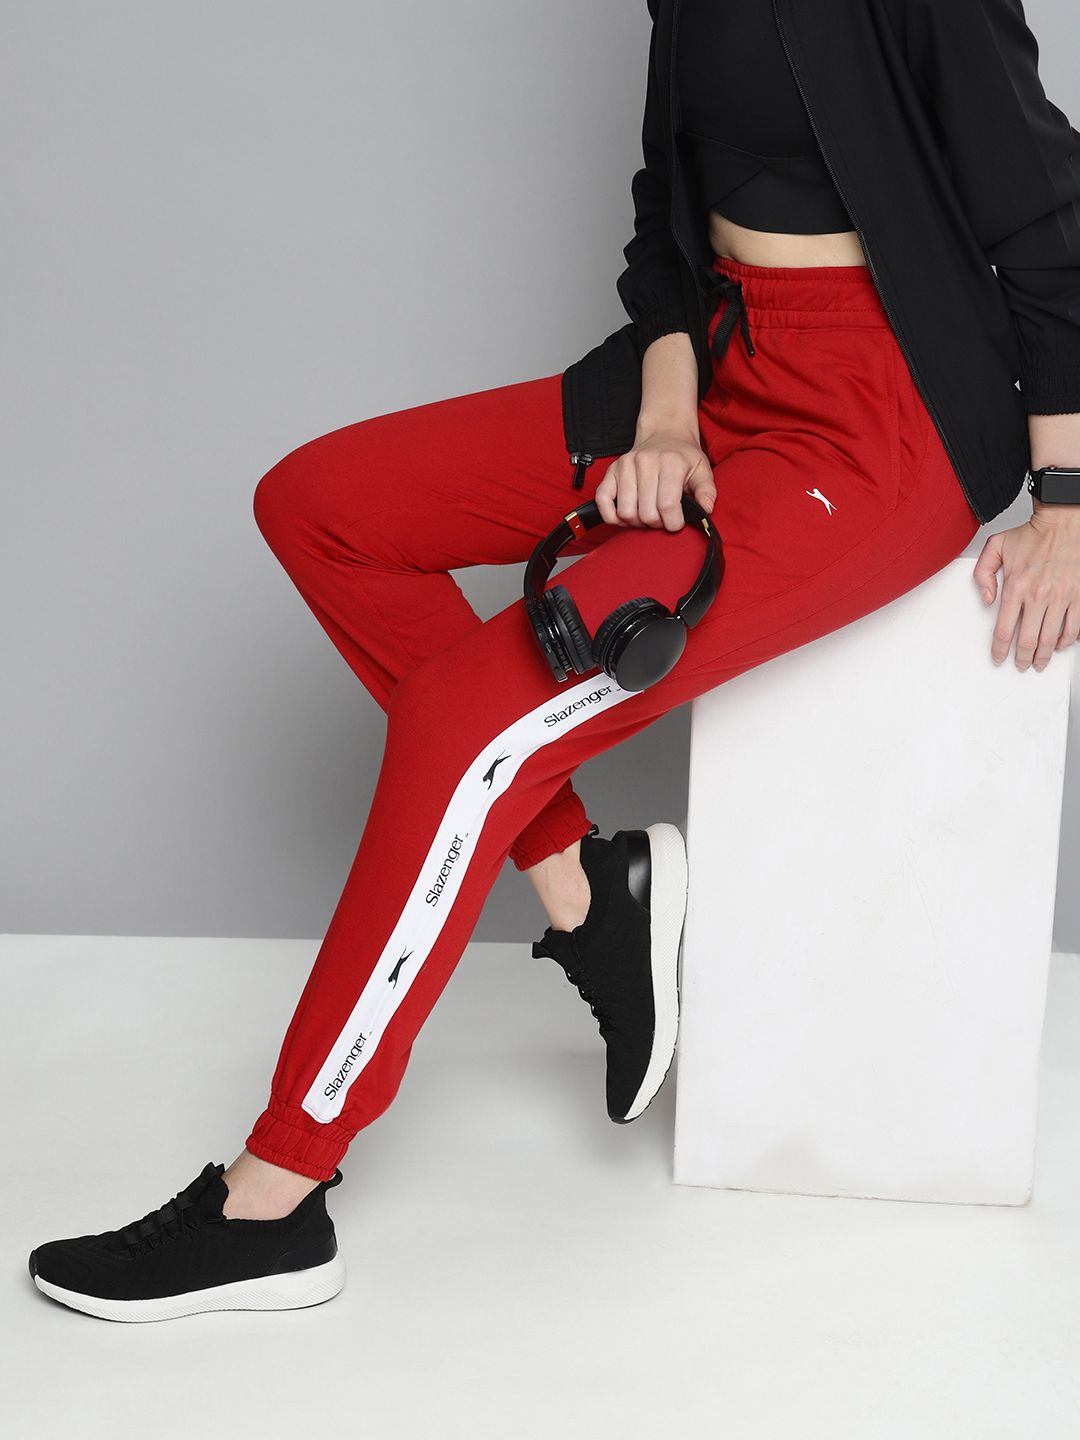 Buy C9 Airwear Black Regular Fit Sports Track Pants for Women Online @ Tata  CLiQ